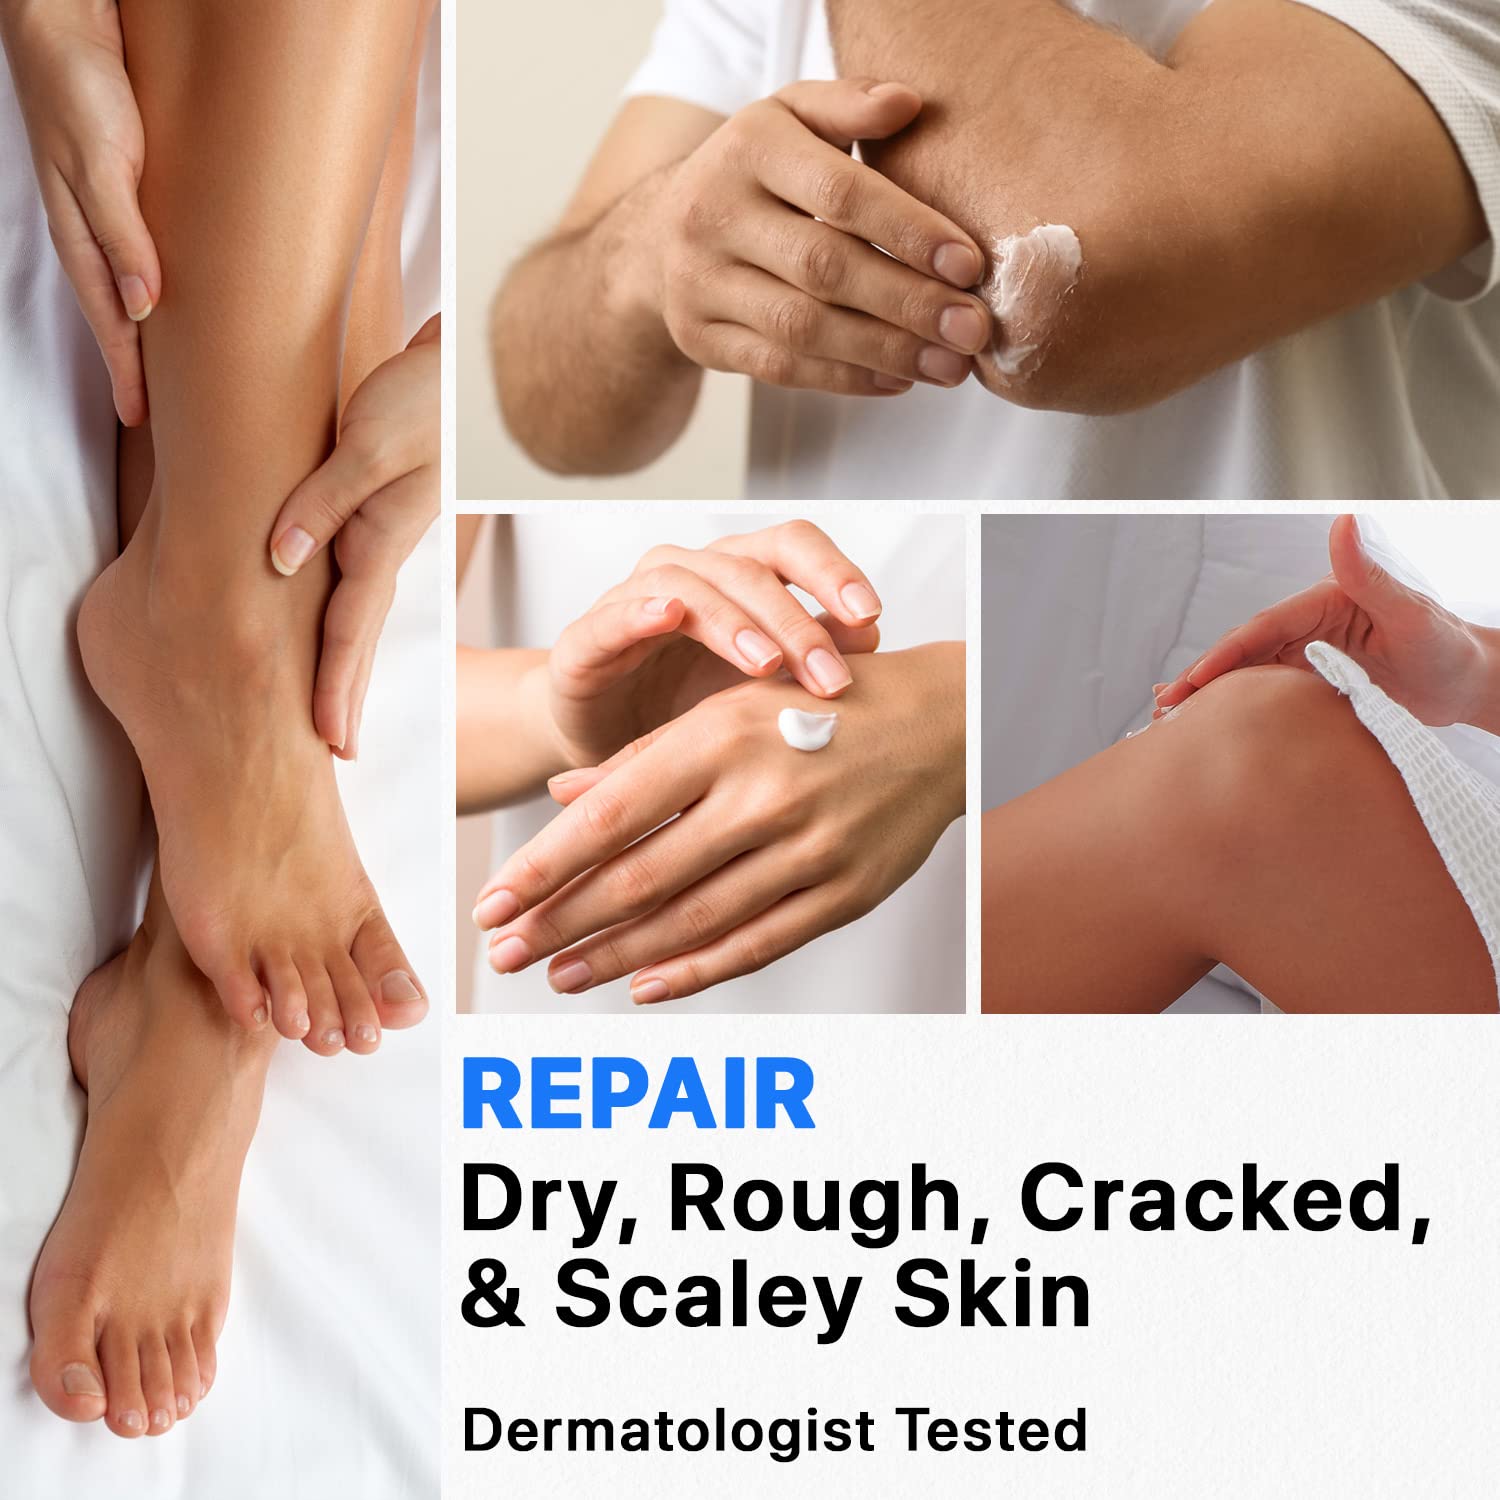 Ebanel Urea Cream 40% plus Salicylic Acid 2%, Foot Cream for Dry Cracked Feet Heels Knees Elbows Hands Repair Treatment, Foot Moisturizer Corn Callus Dead Skin Remover Toenail Softener for Feet Care